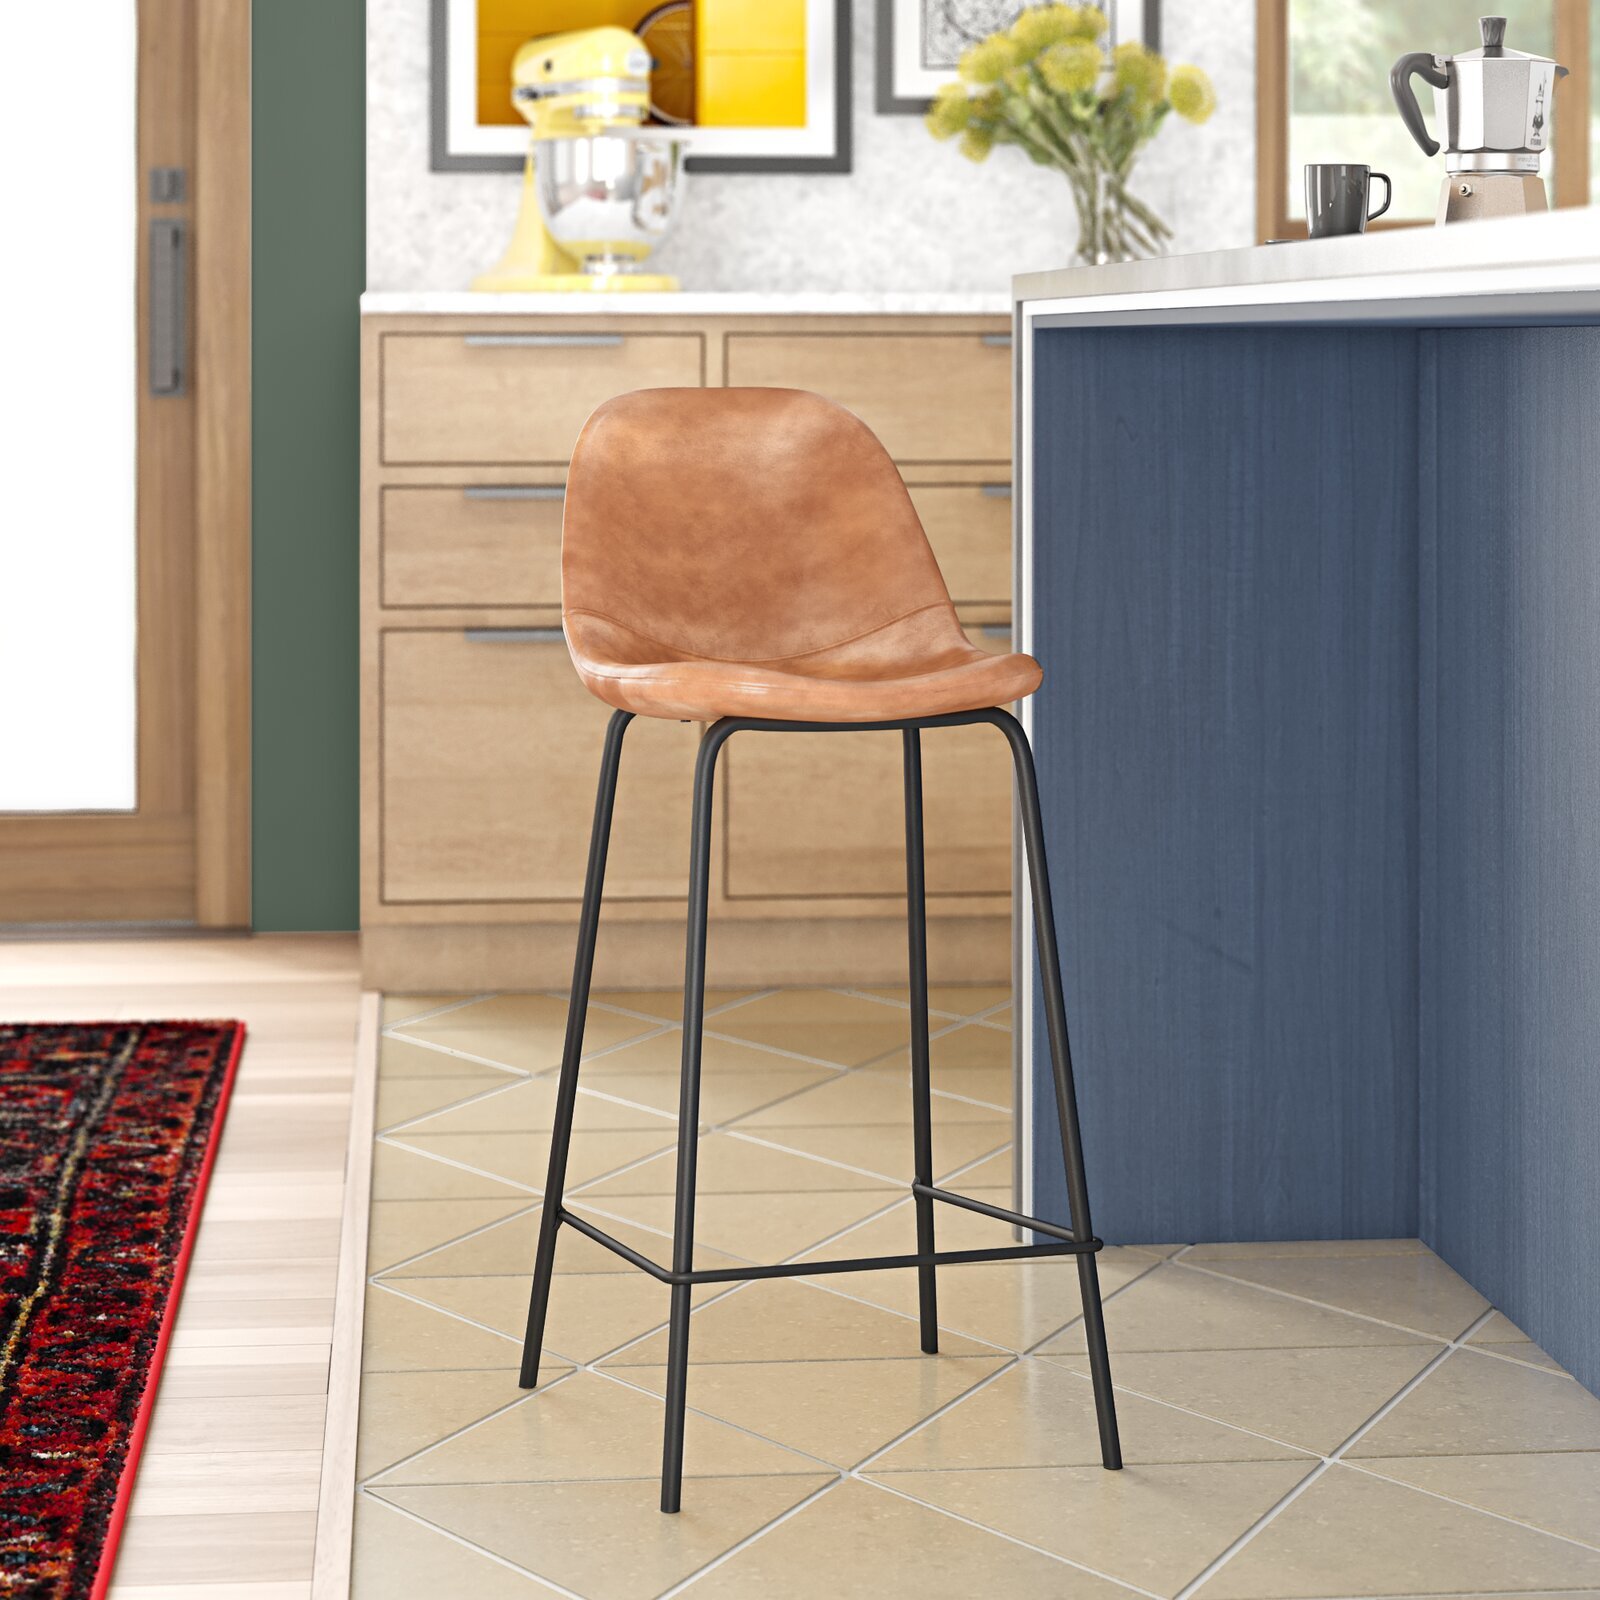 Upholstered Countertop or Bar Stools